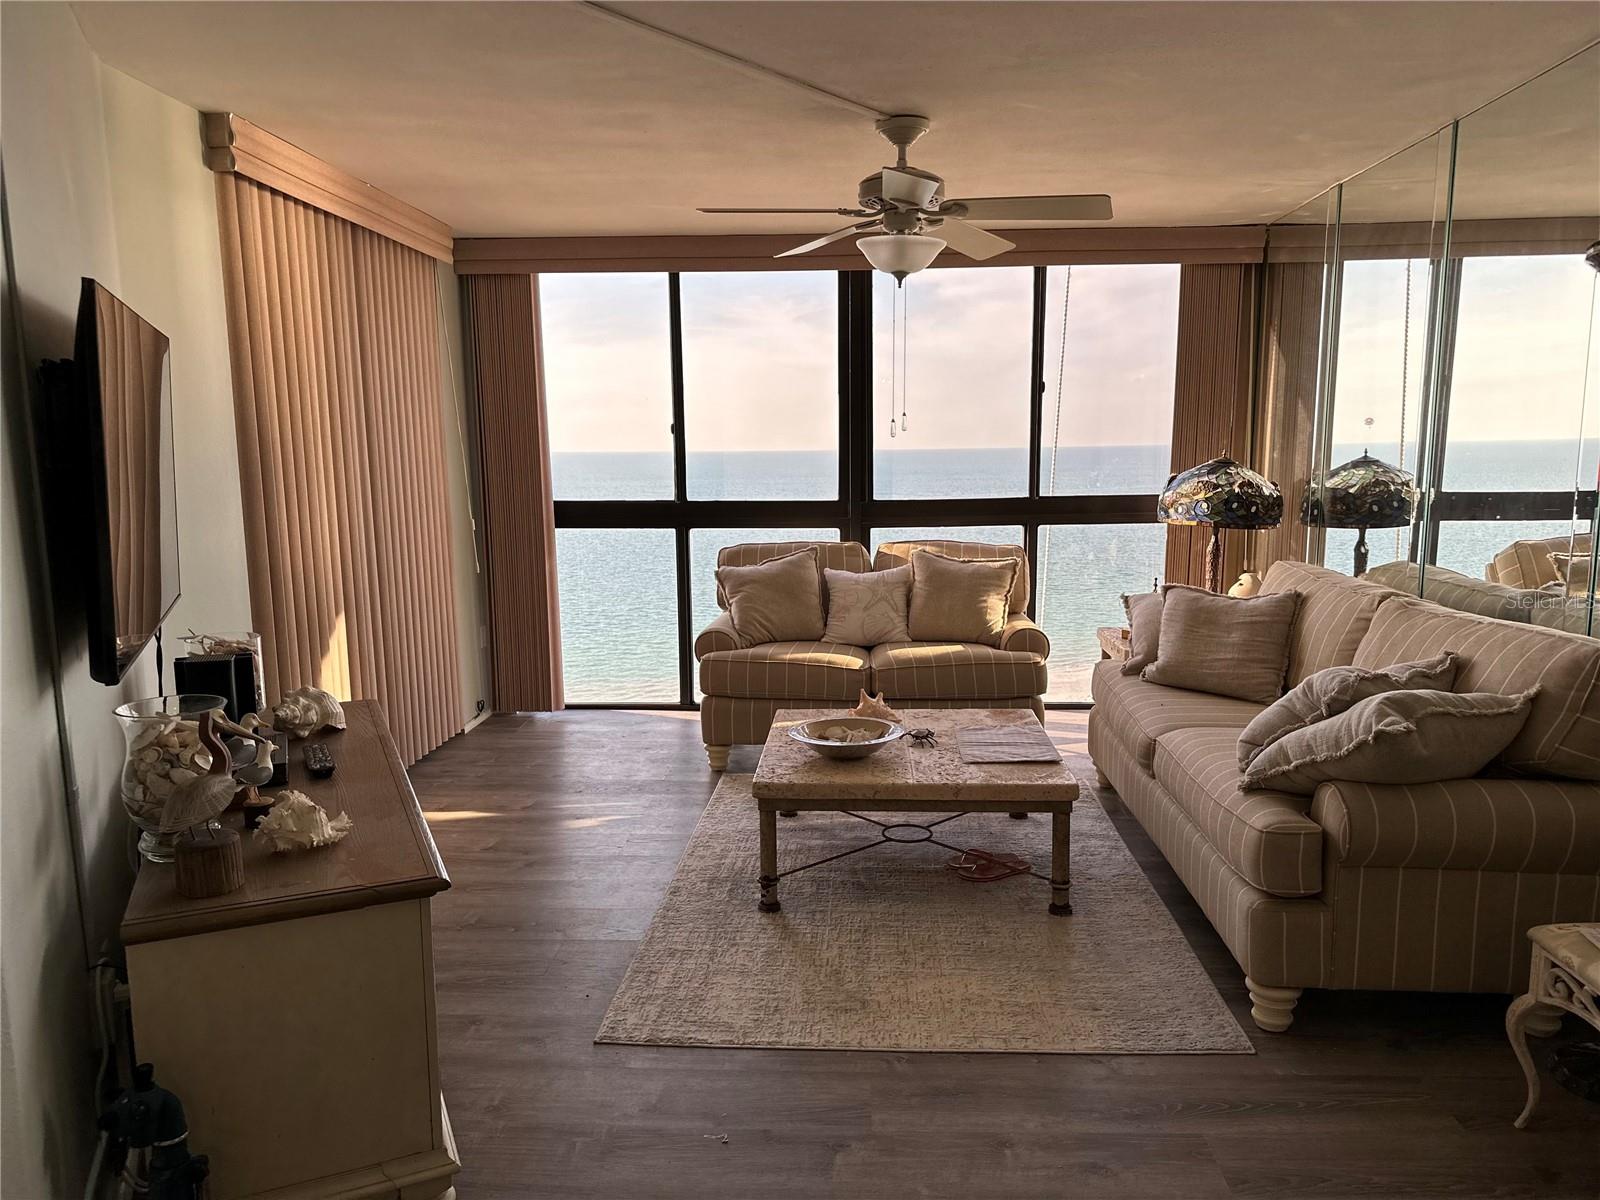 Living room views of the beach